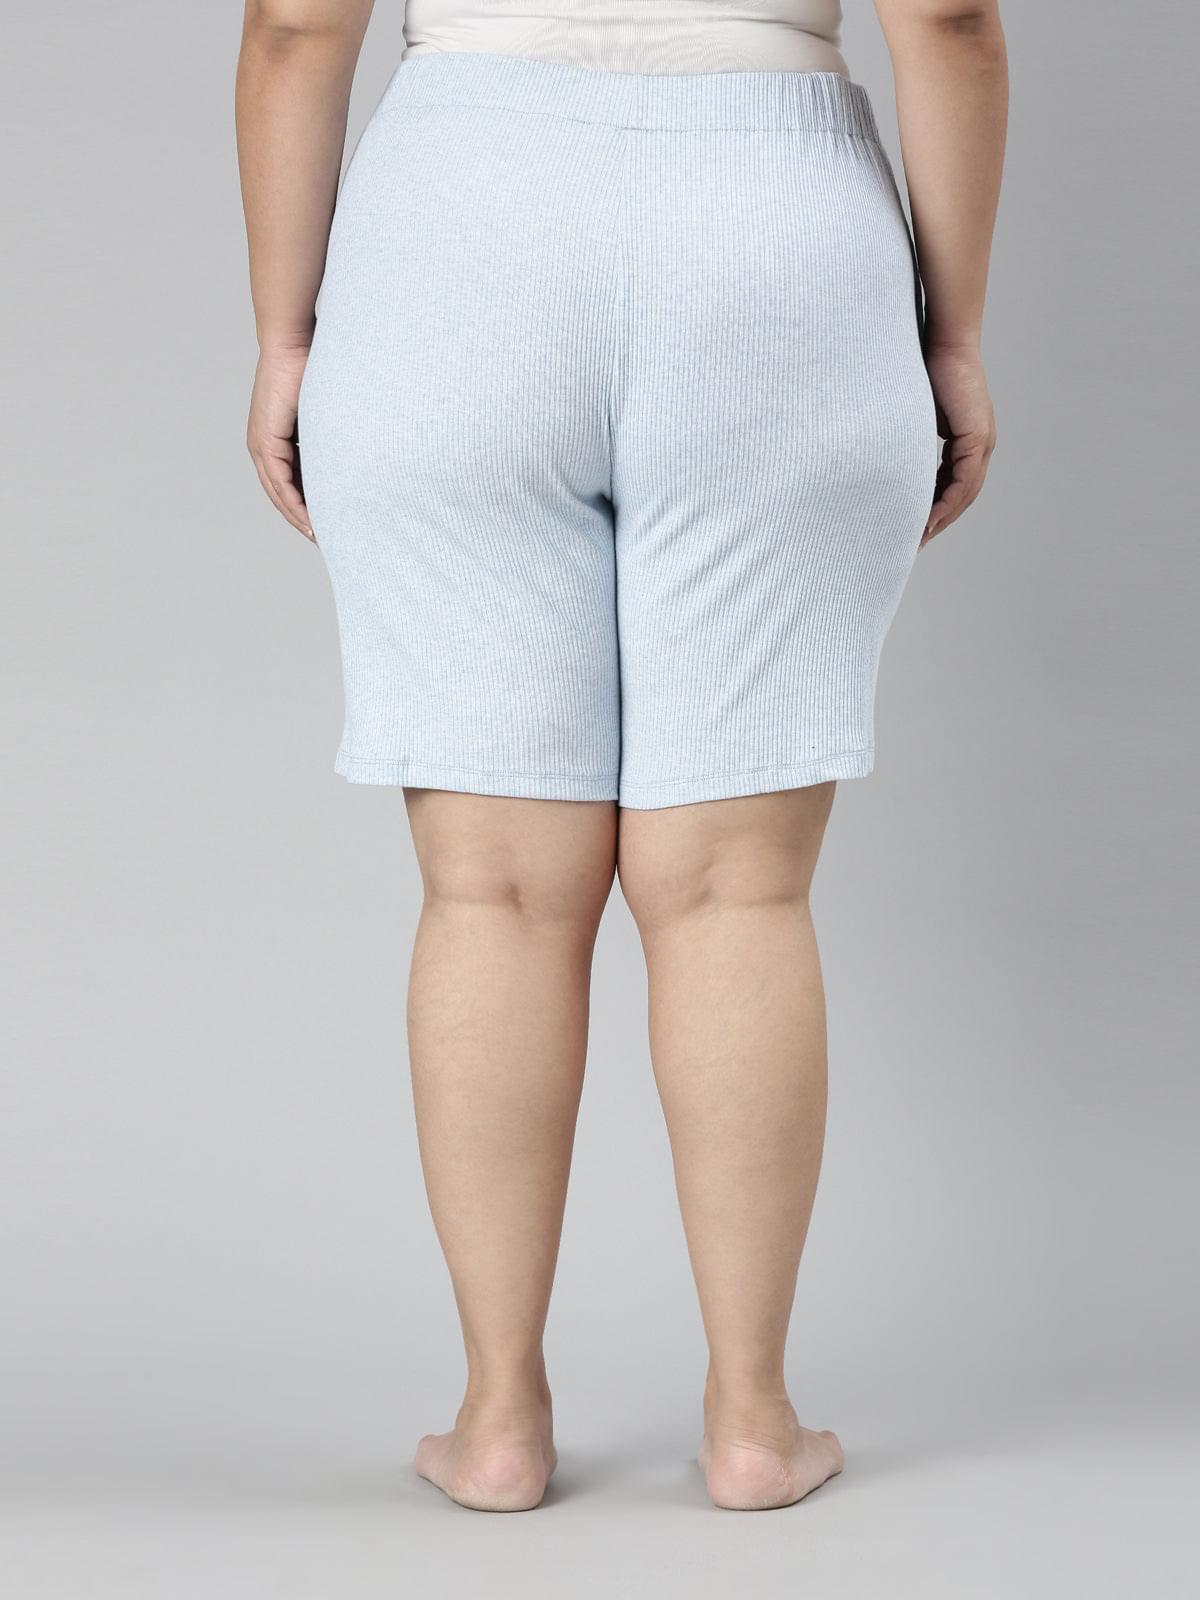 TheShaili - Women's Blue ribbed Top and shorts lounge wear set